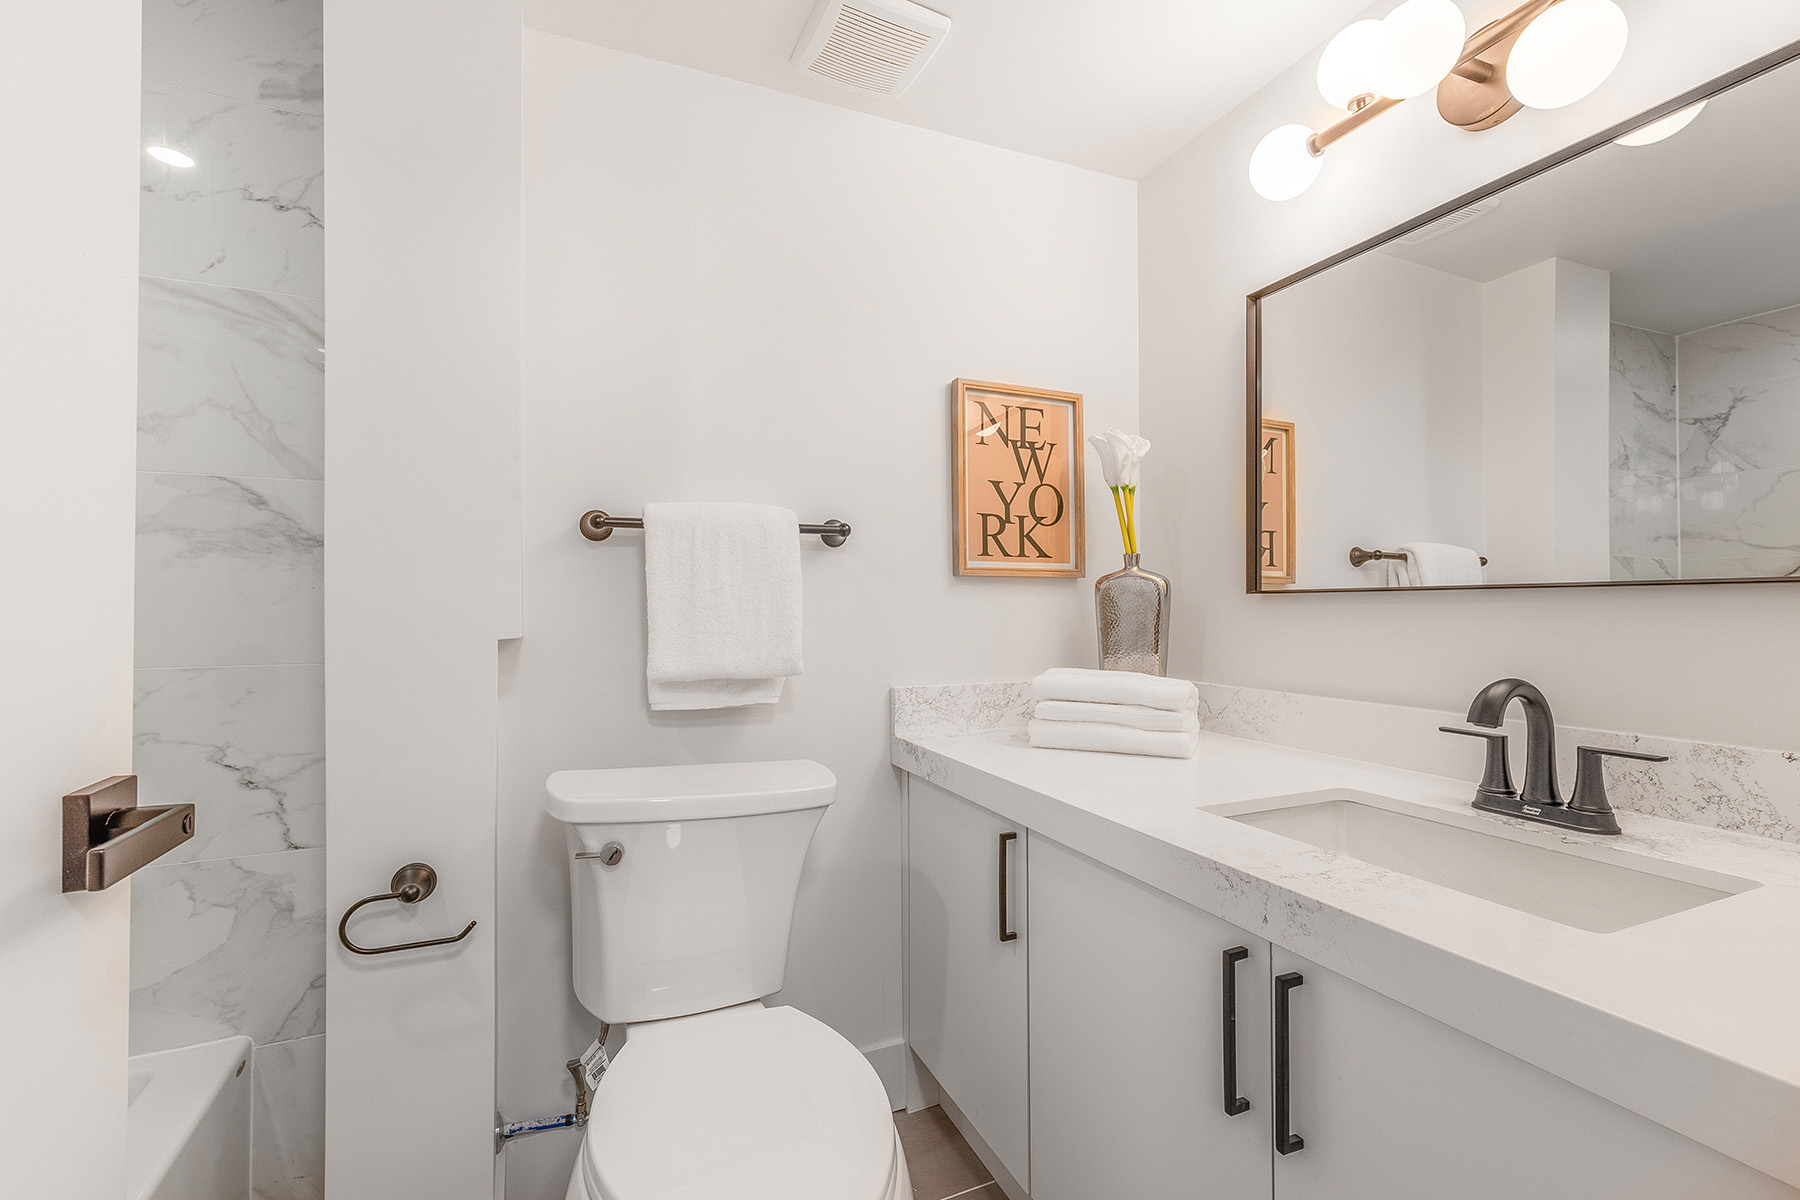 4-piece bathroom white gray-white tiles, counters, tub, storage cabinets – 54 Huntington Avenue.